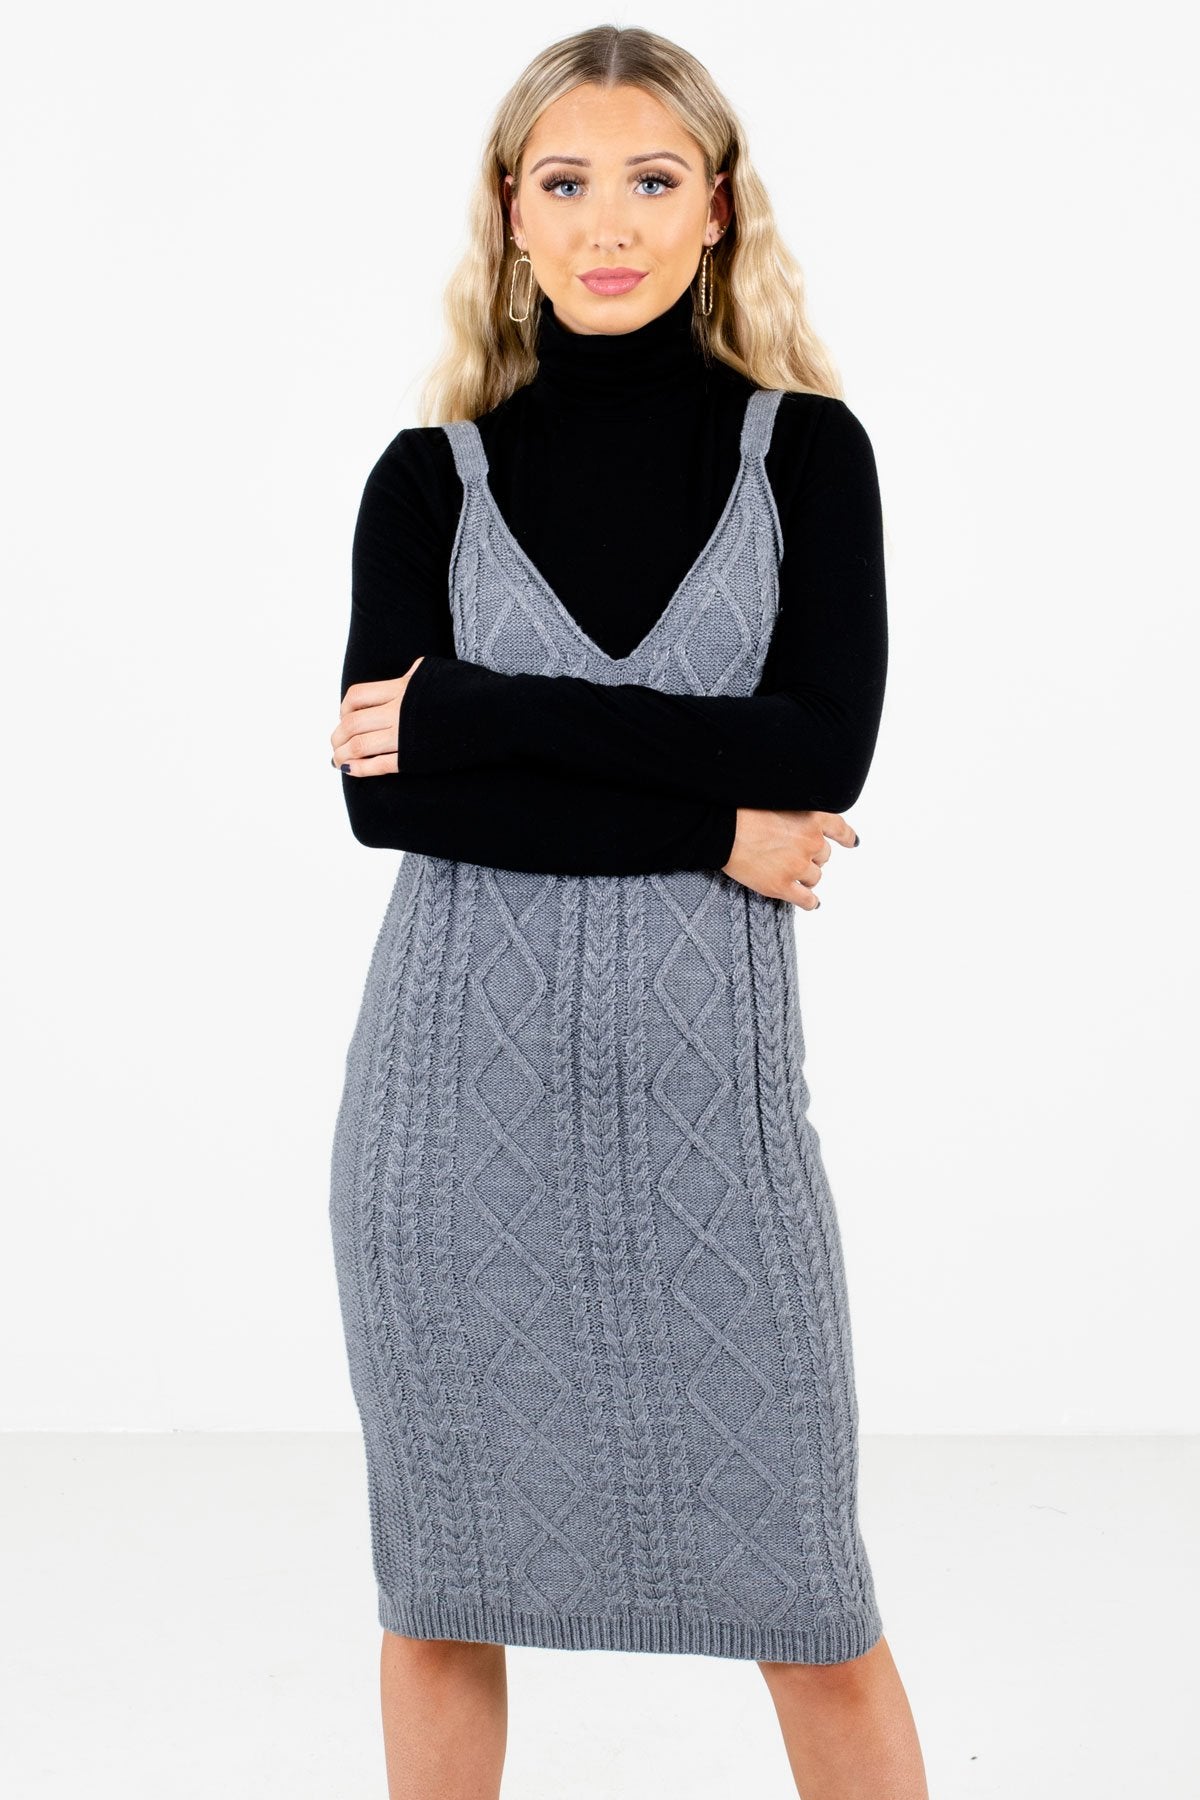 Women’s Gray Tank Style Boutique Knee-Length Dress